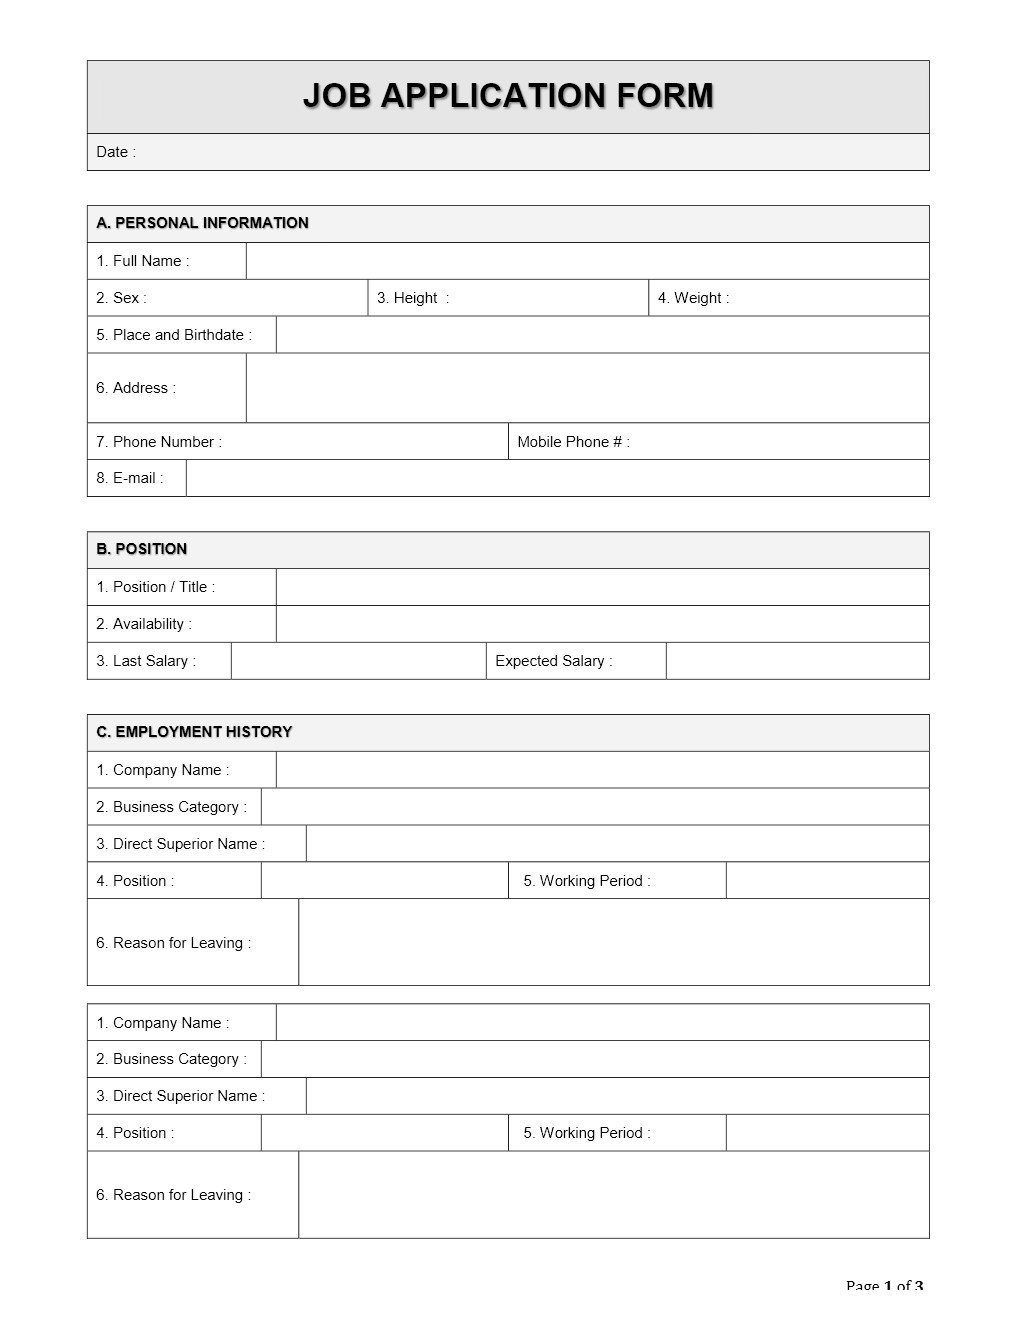 Employee Job Application Form